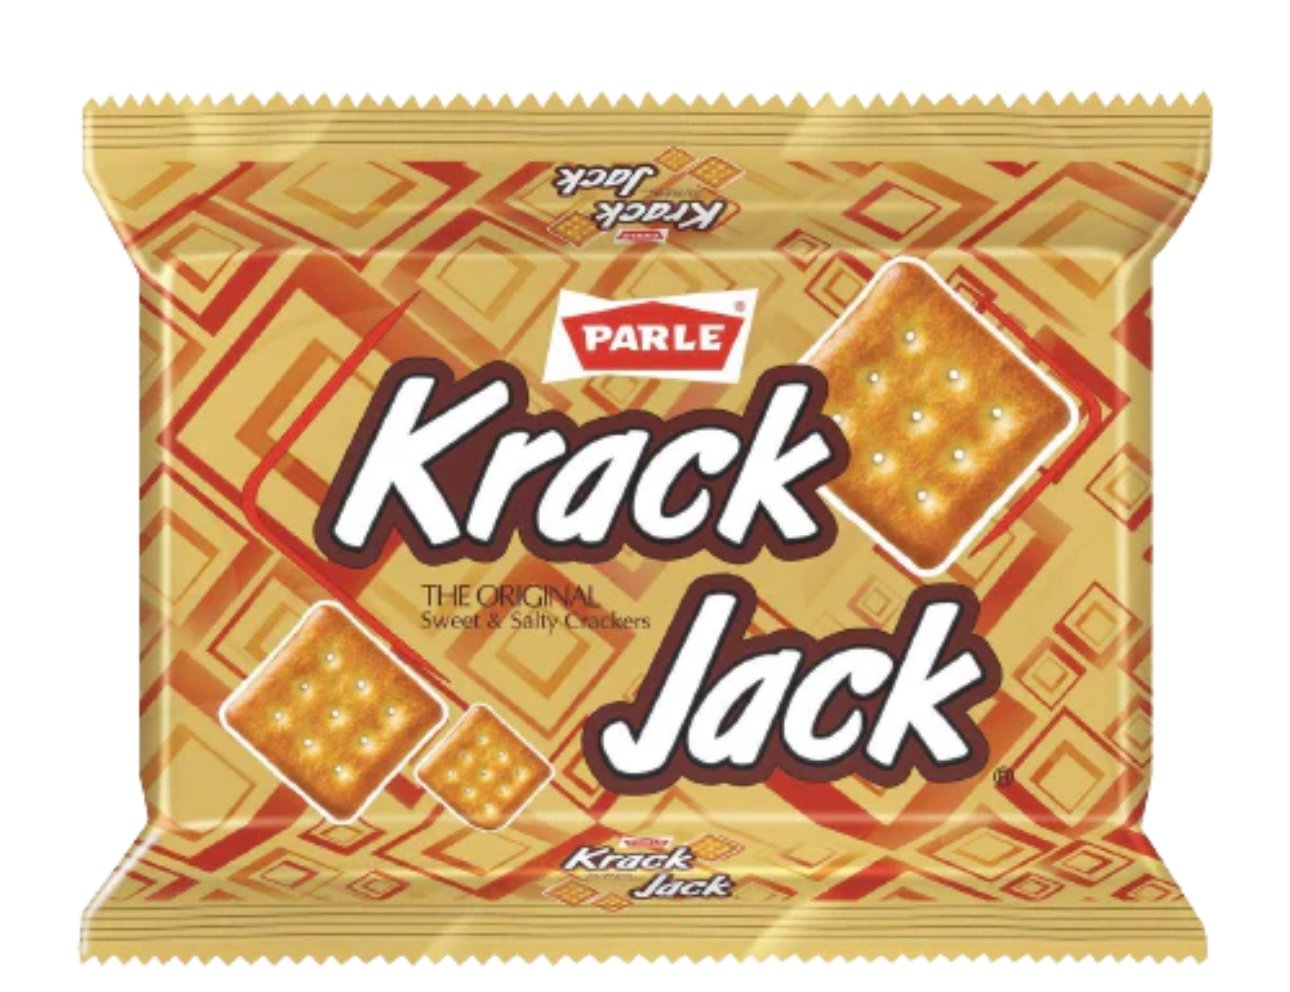 Parle Krackjack Family Pack (Pack of 6) 264g